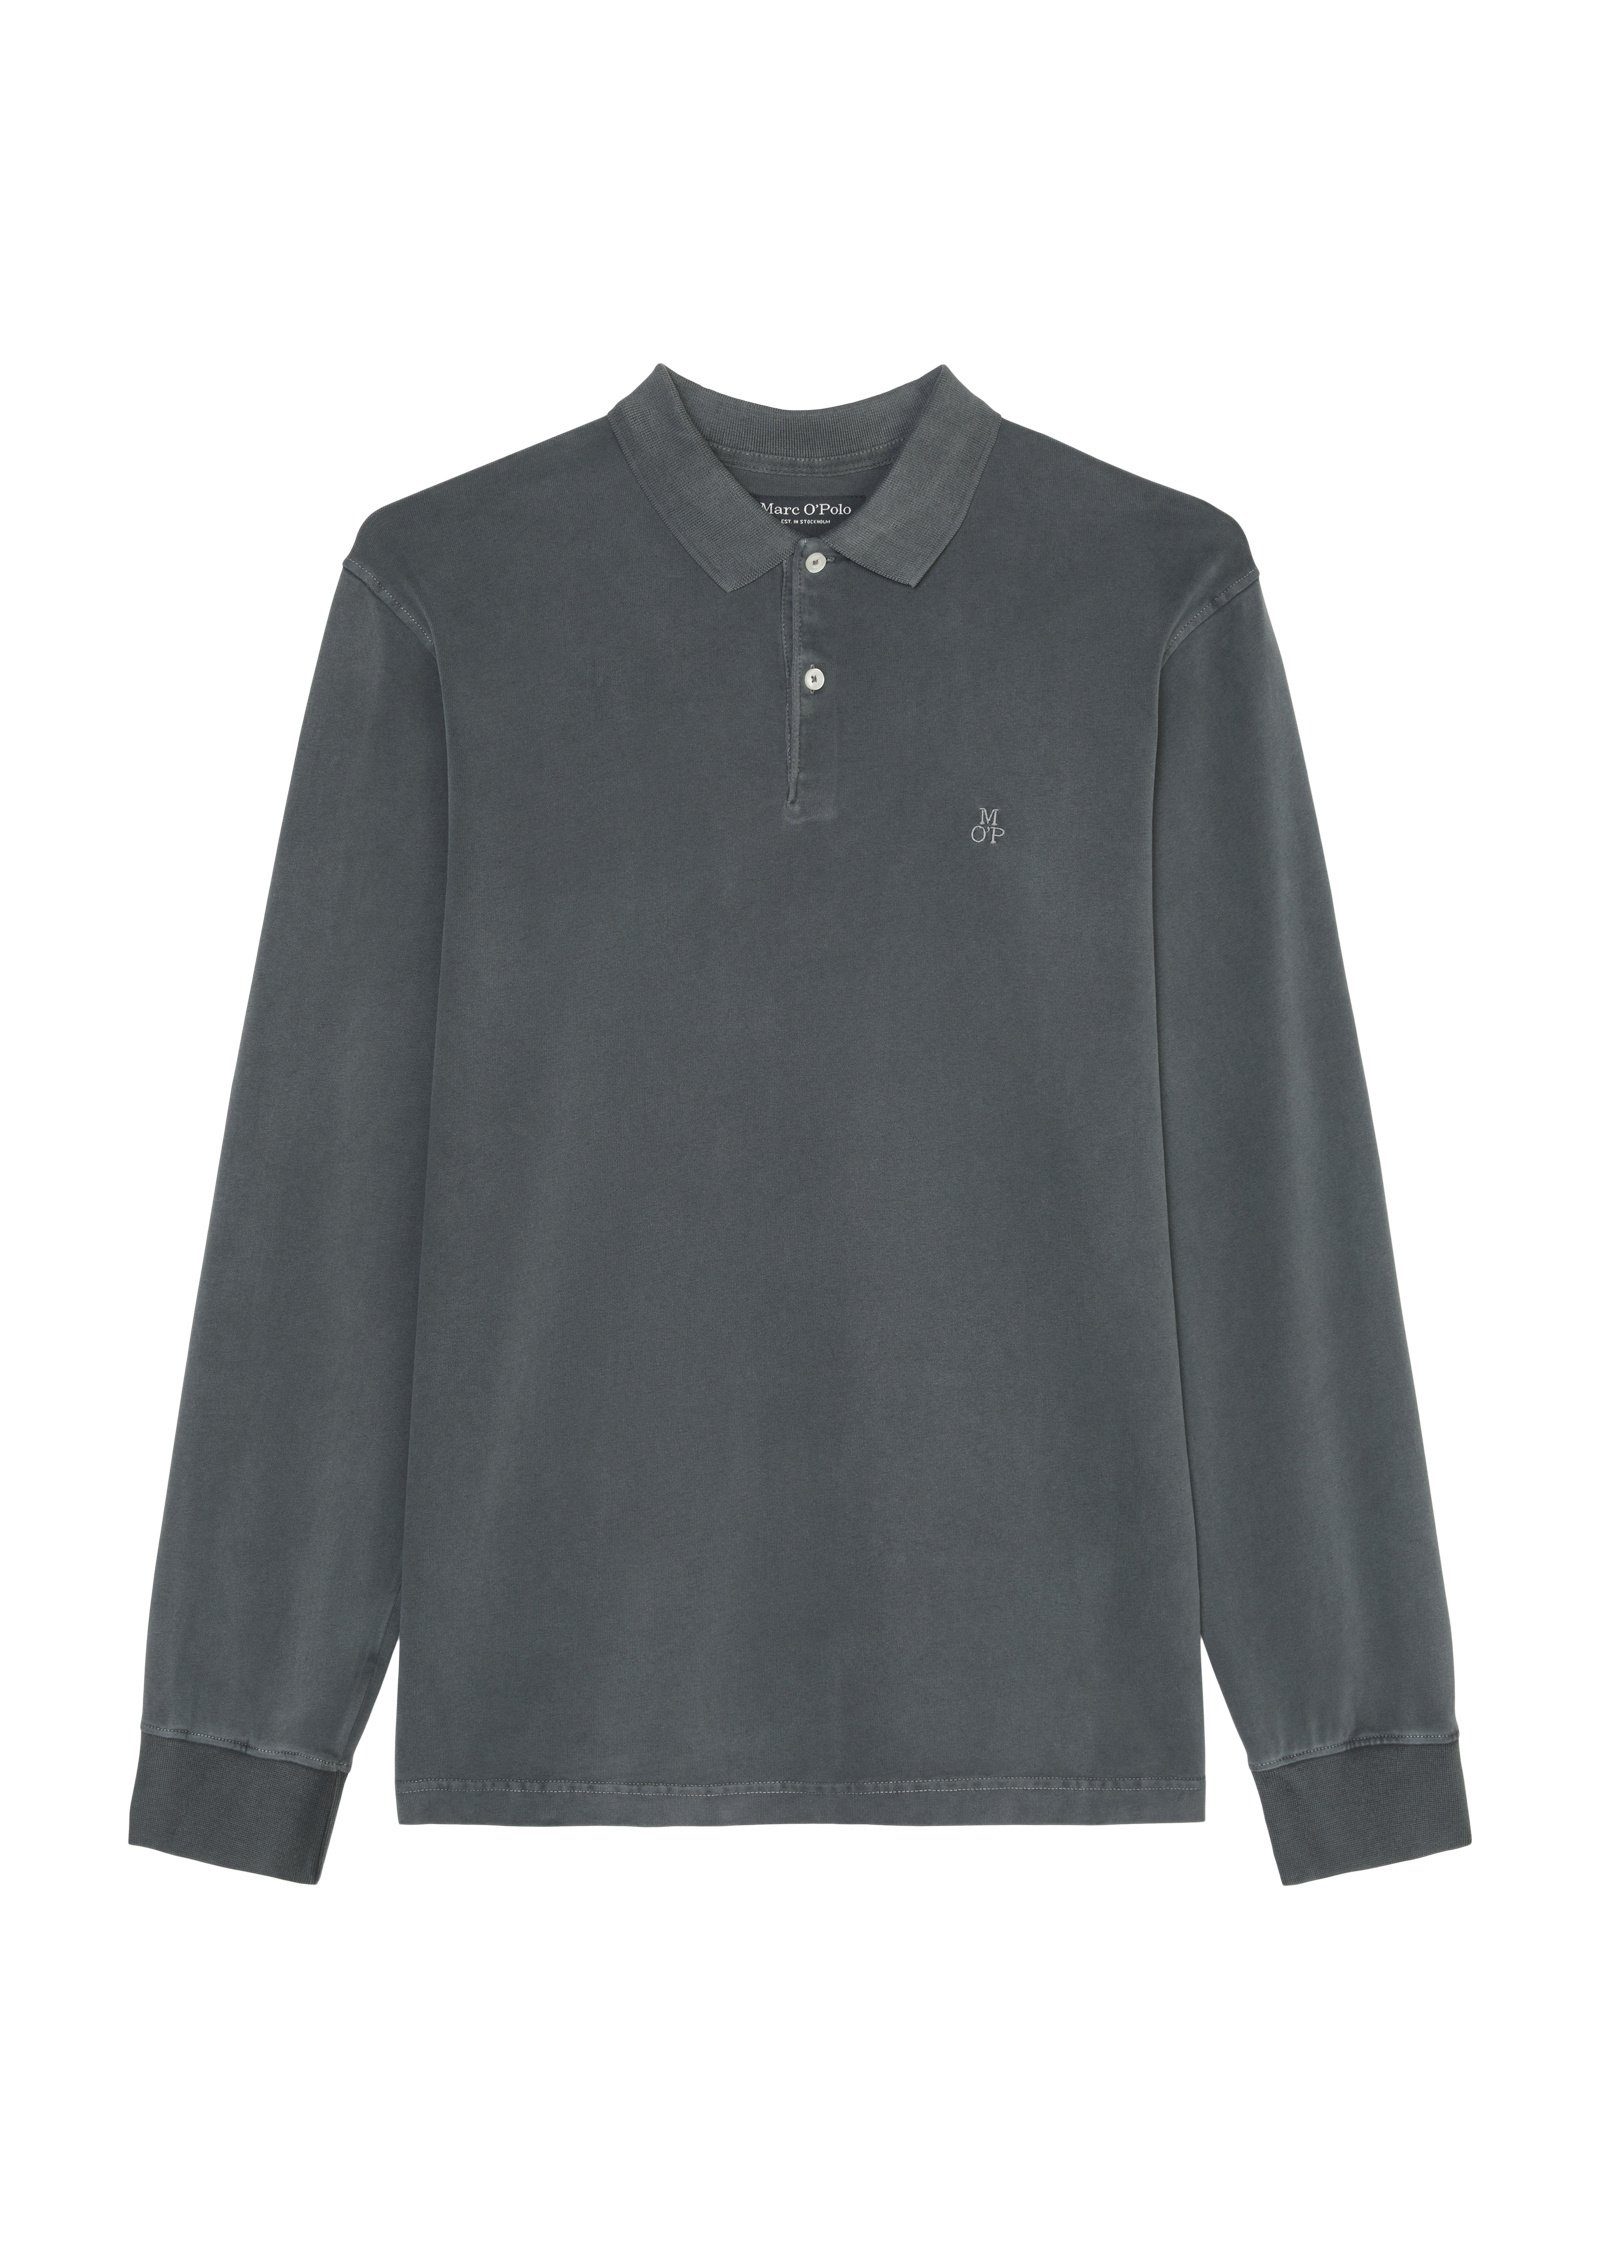 O'Polo Soft-Touch-Jersey-Qualität in grau Langarm-Poloshirt schwerer Marc